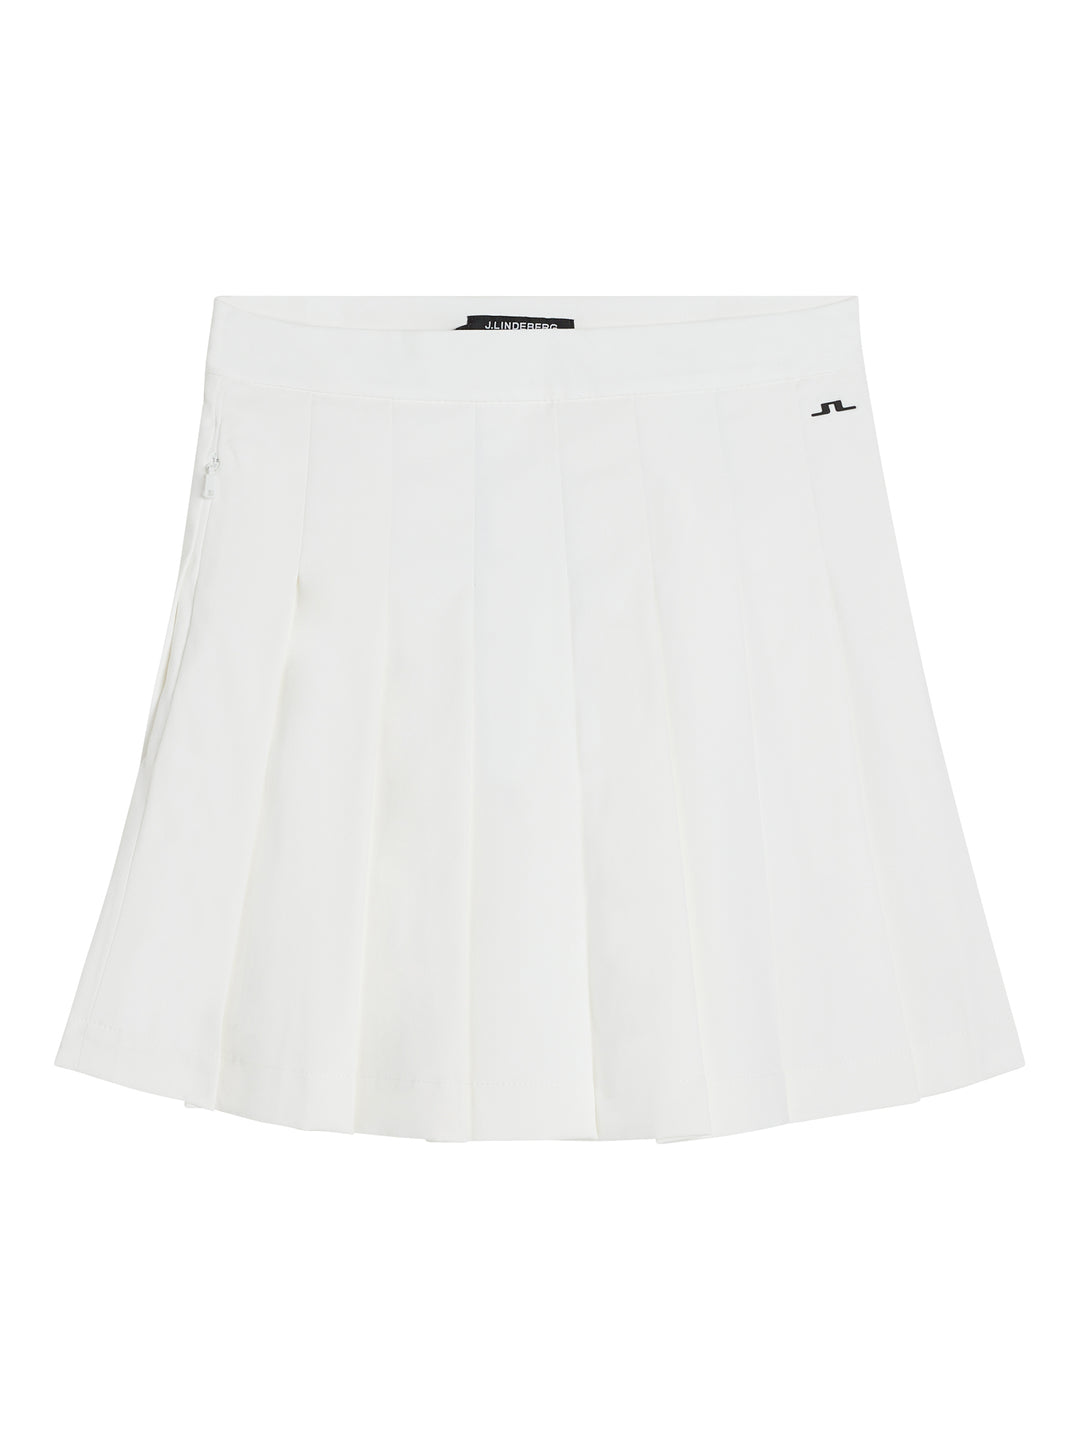 J.Lindeberg Womens Adina Golf Skirt - WHITE